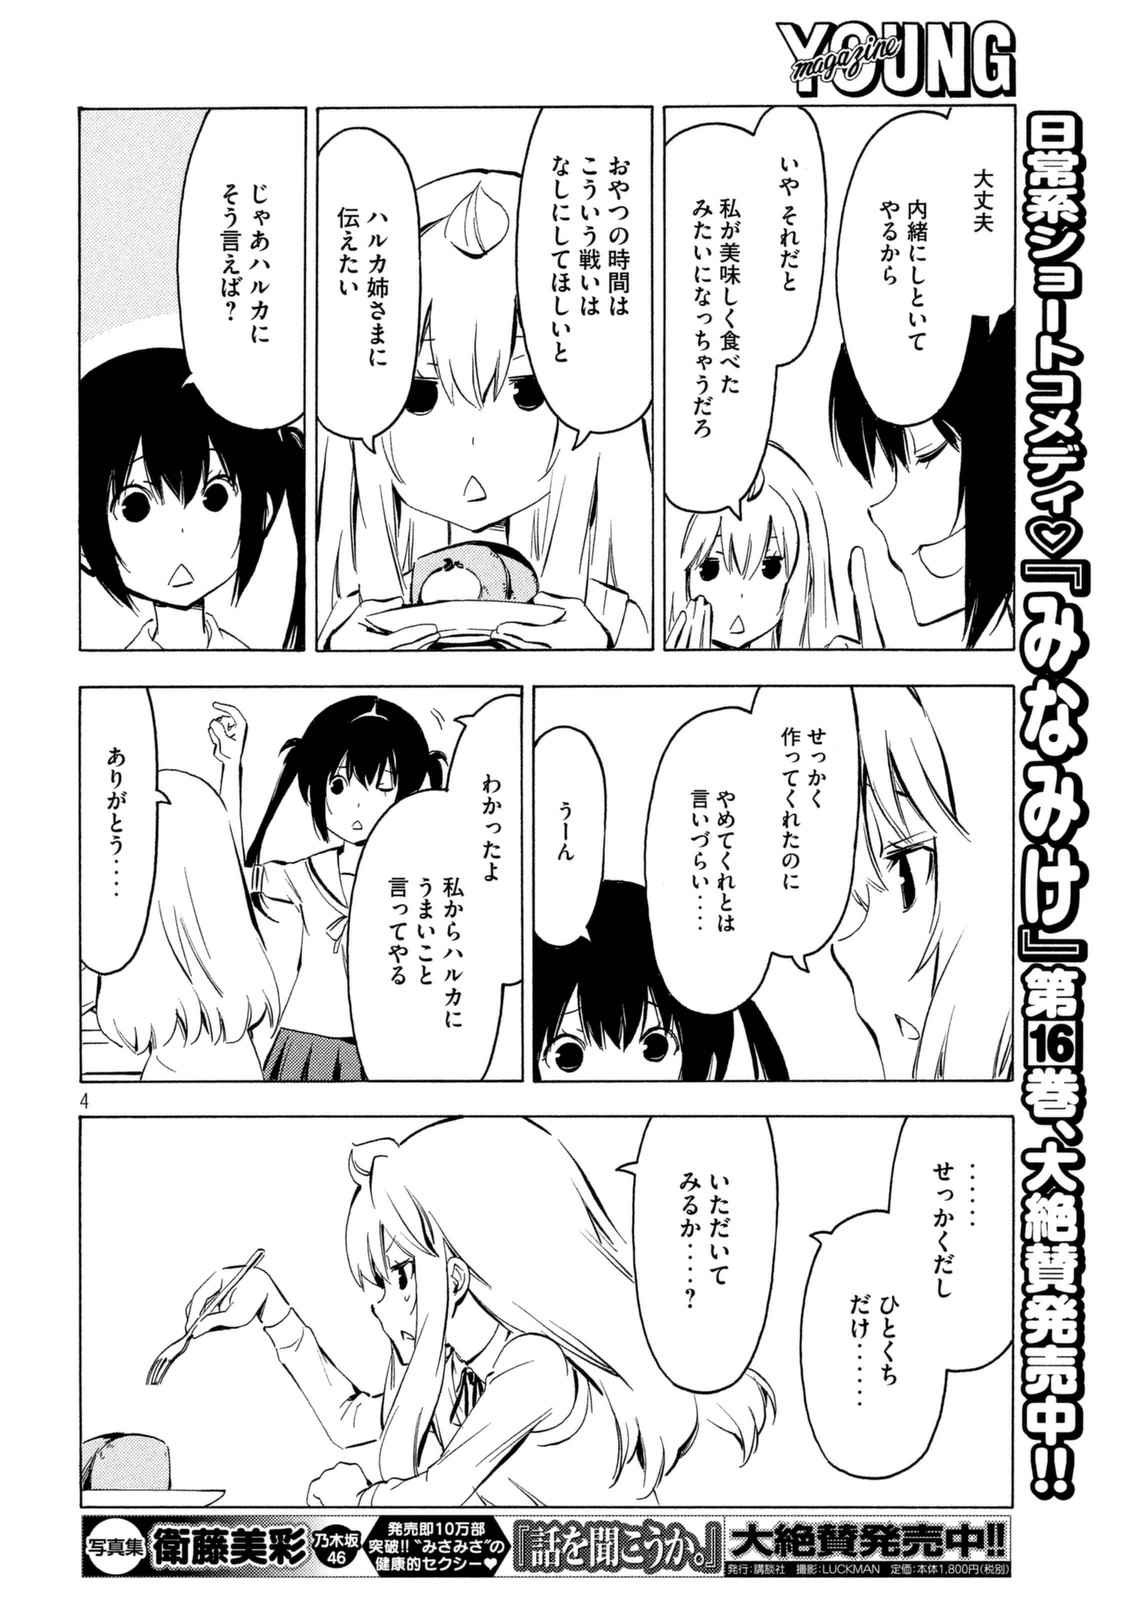 Minami-ke - Chapter 321 - Page 4